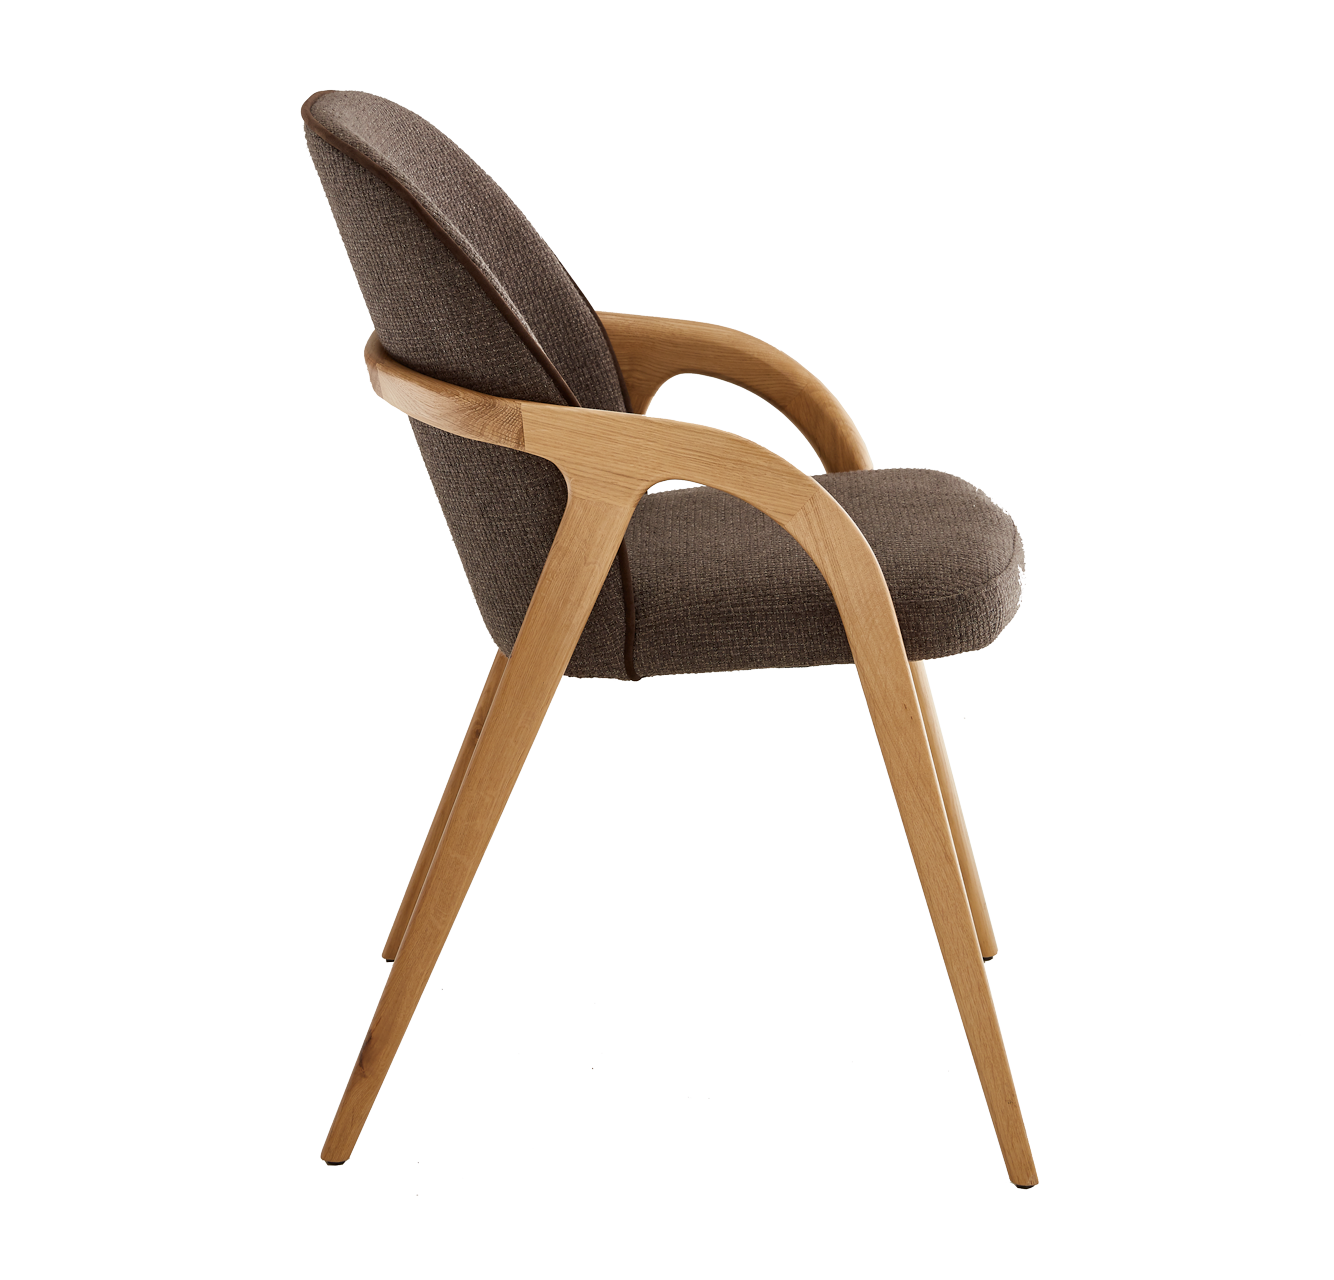 Abbildung Stuhl Tessa